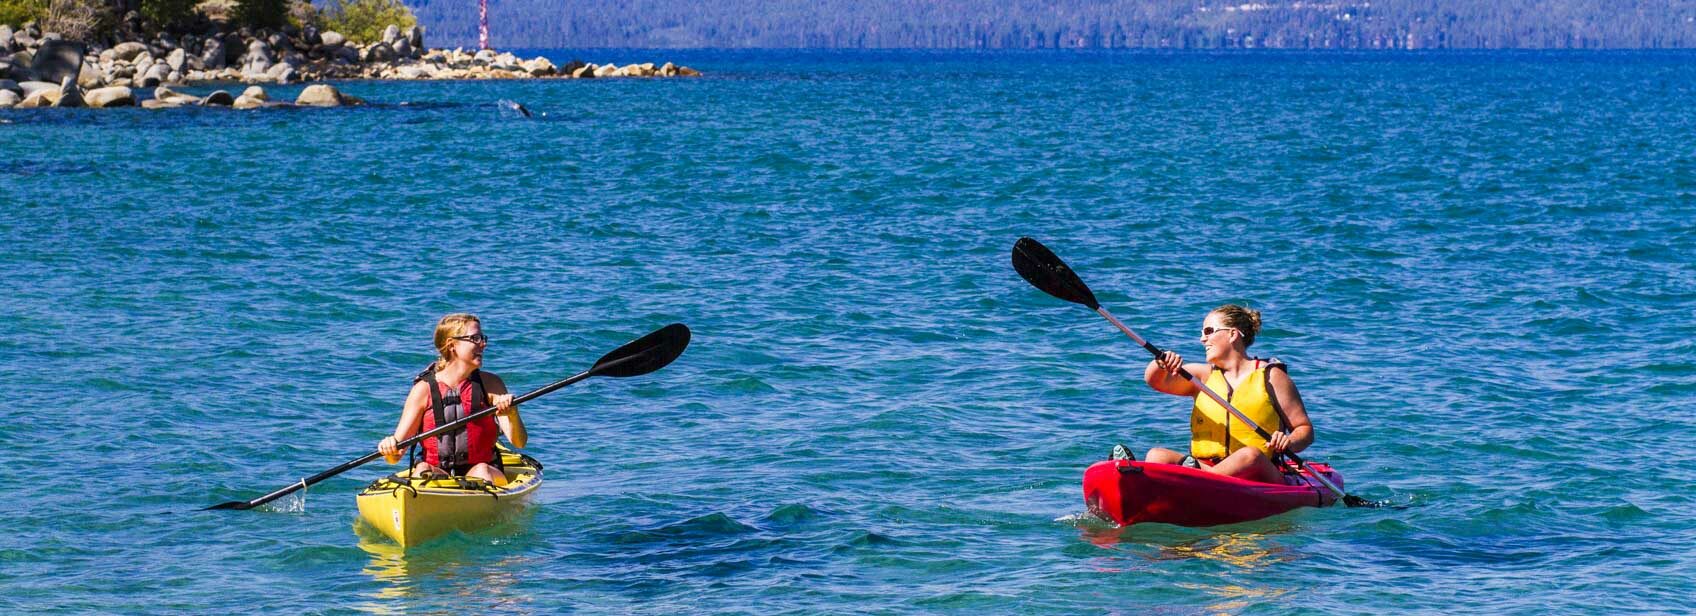 2-kayakers